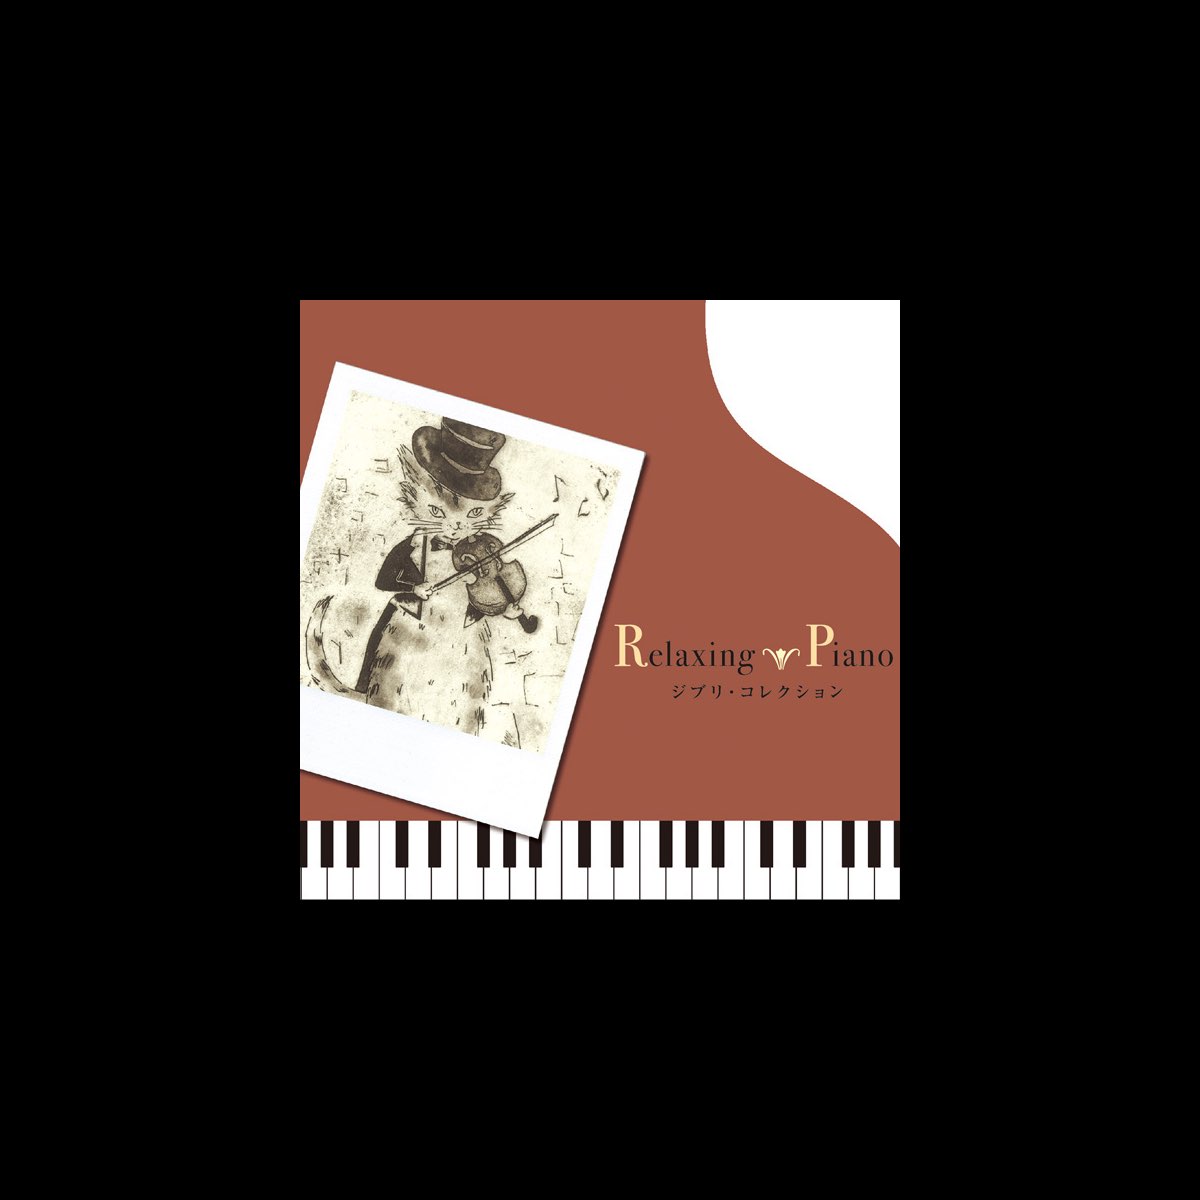 Relaxing Piano - Ghibli / Hayao Miyazaki Collection by Relaxing Piano on  Apple Music